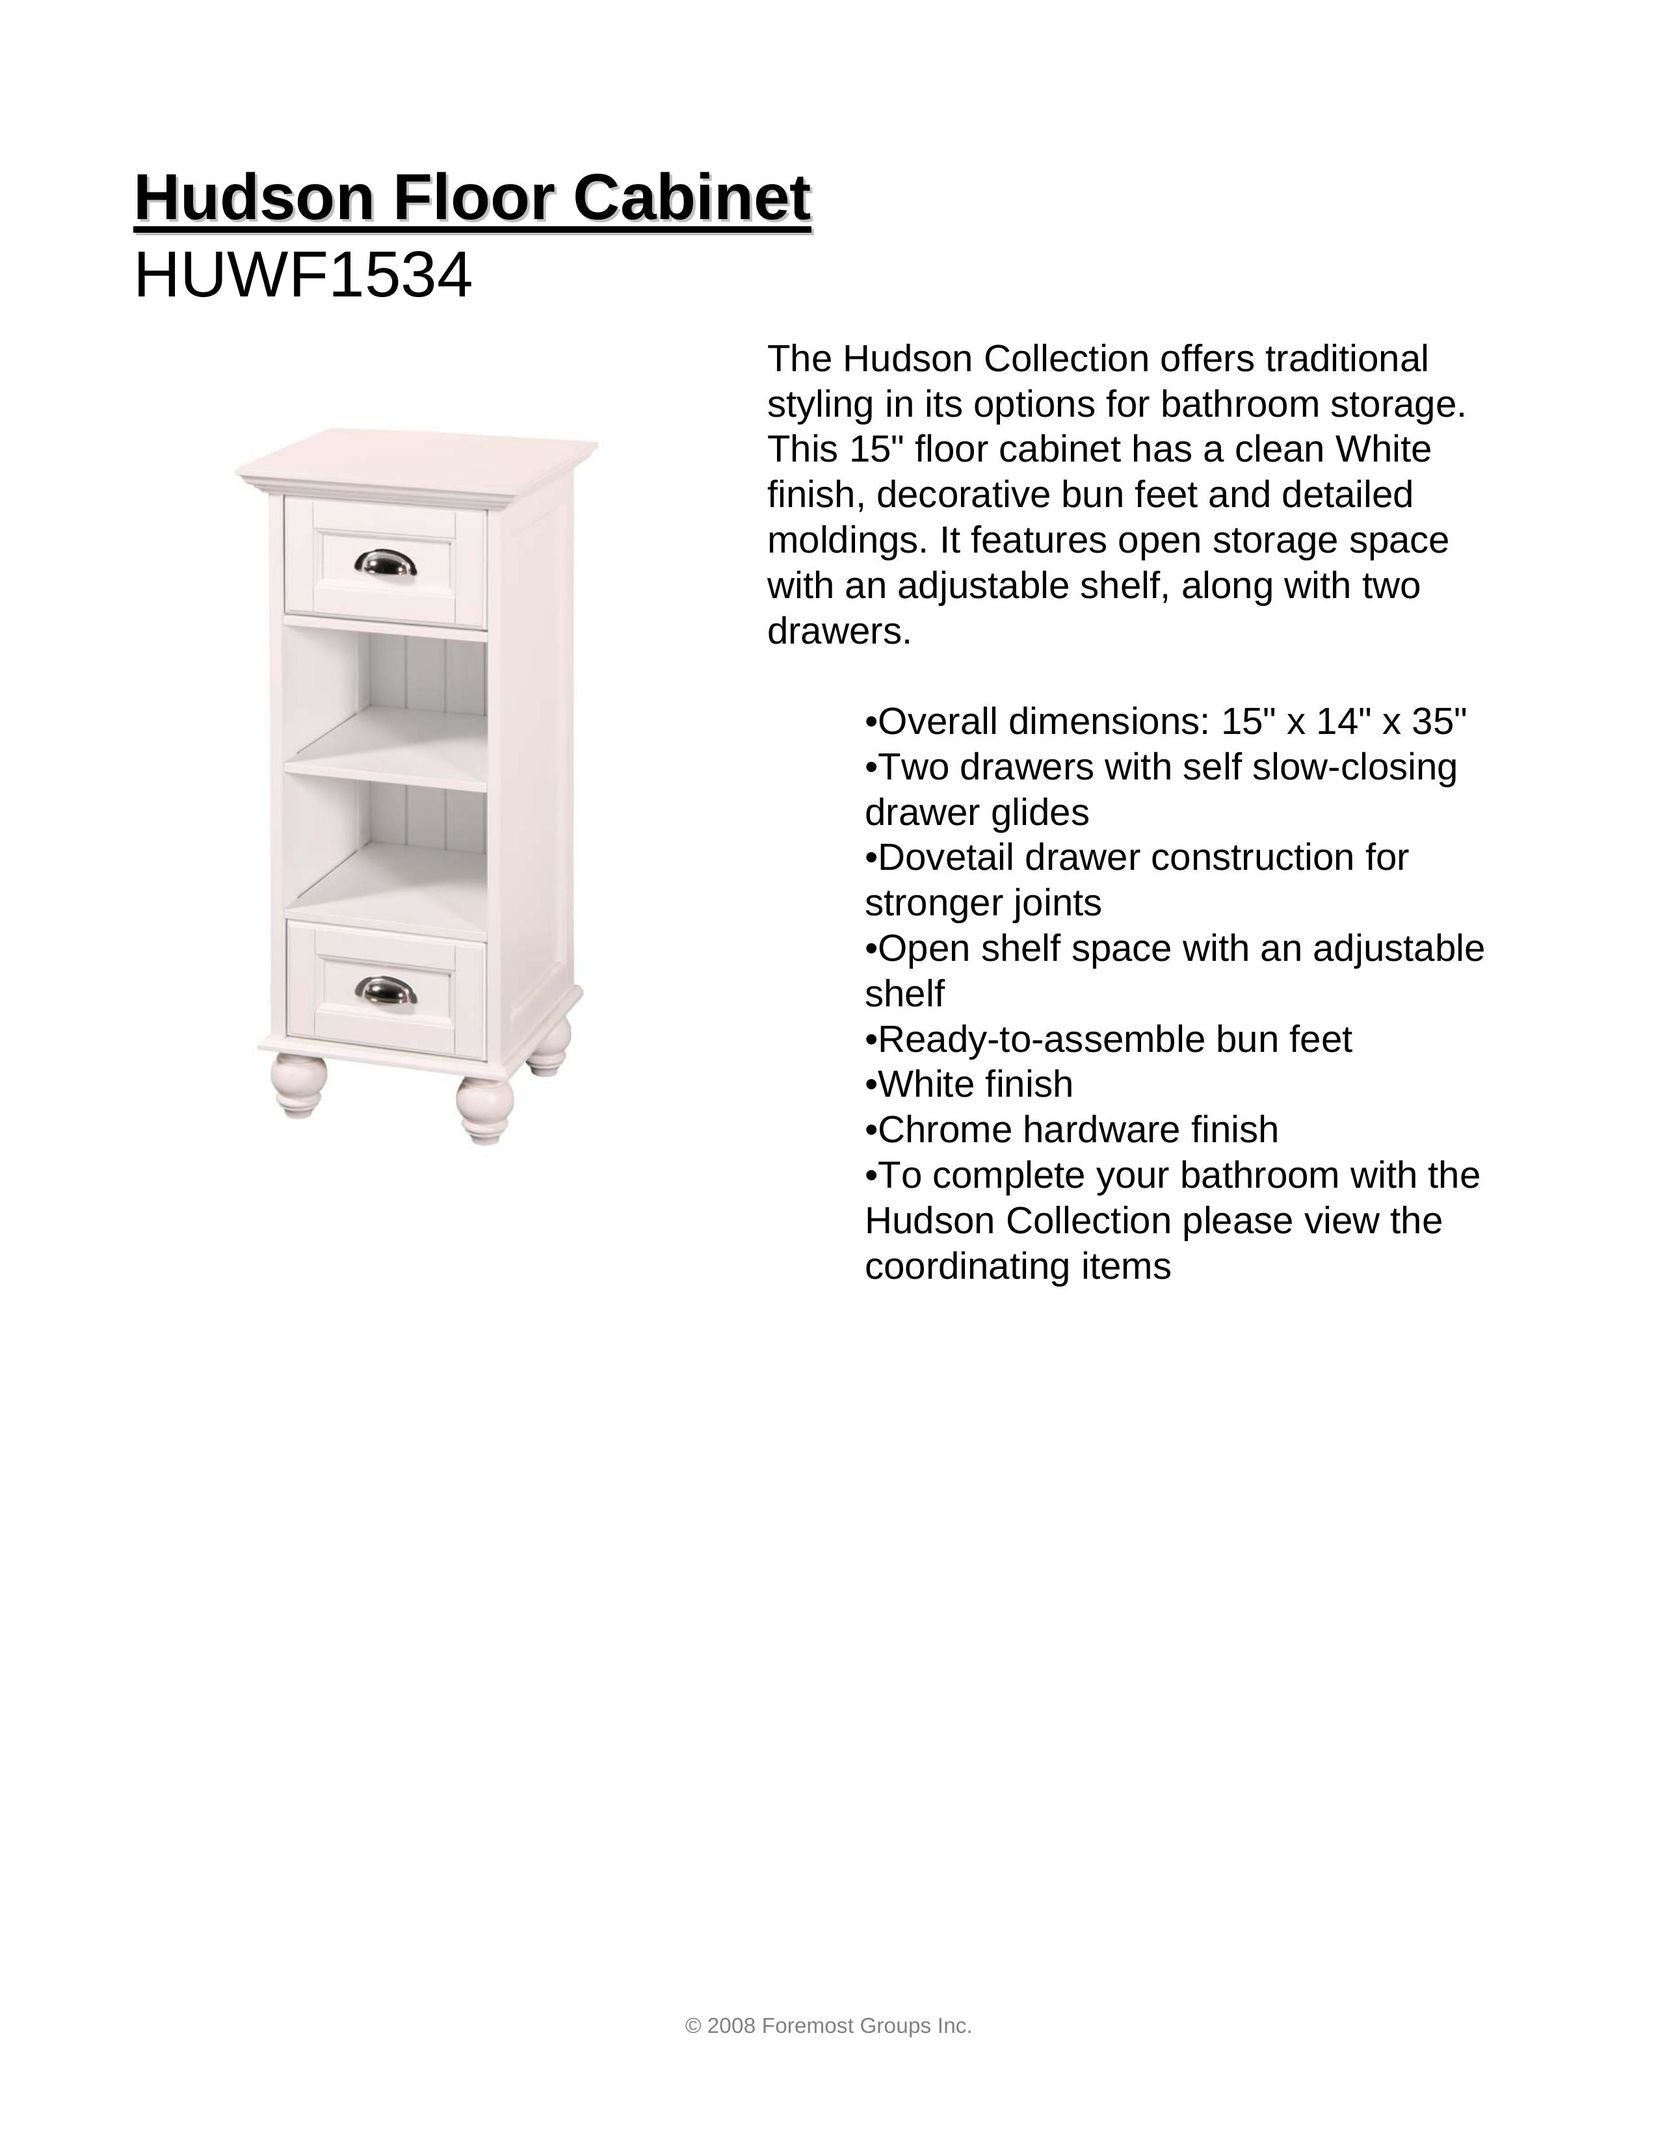 Hudson Sales & Engineering HUWW1828 Indoor Furnishings User Manual